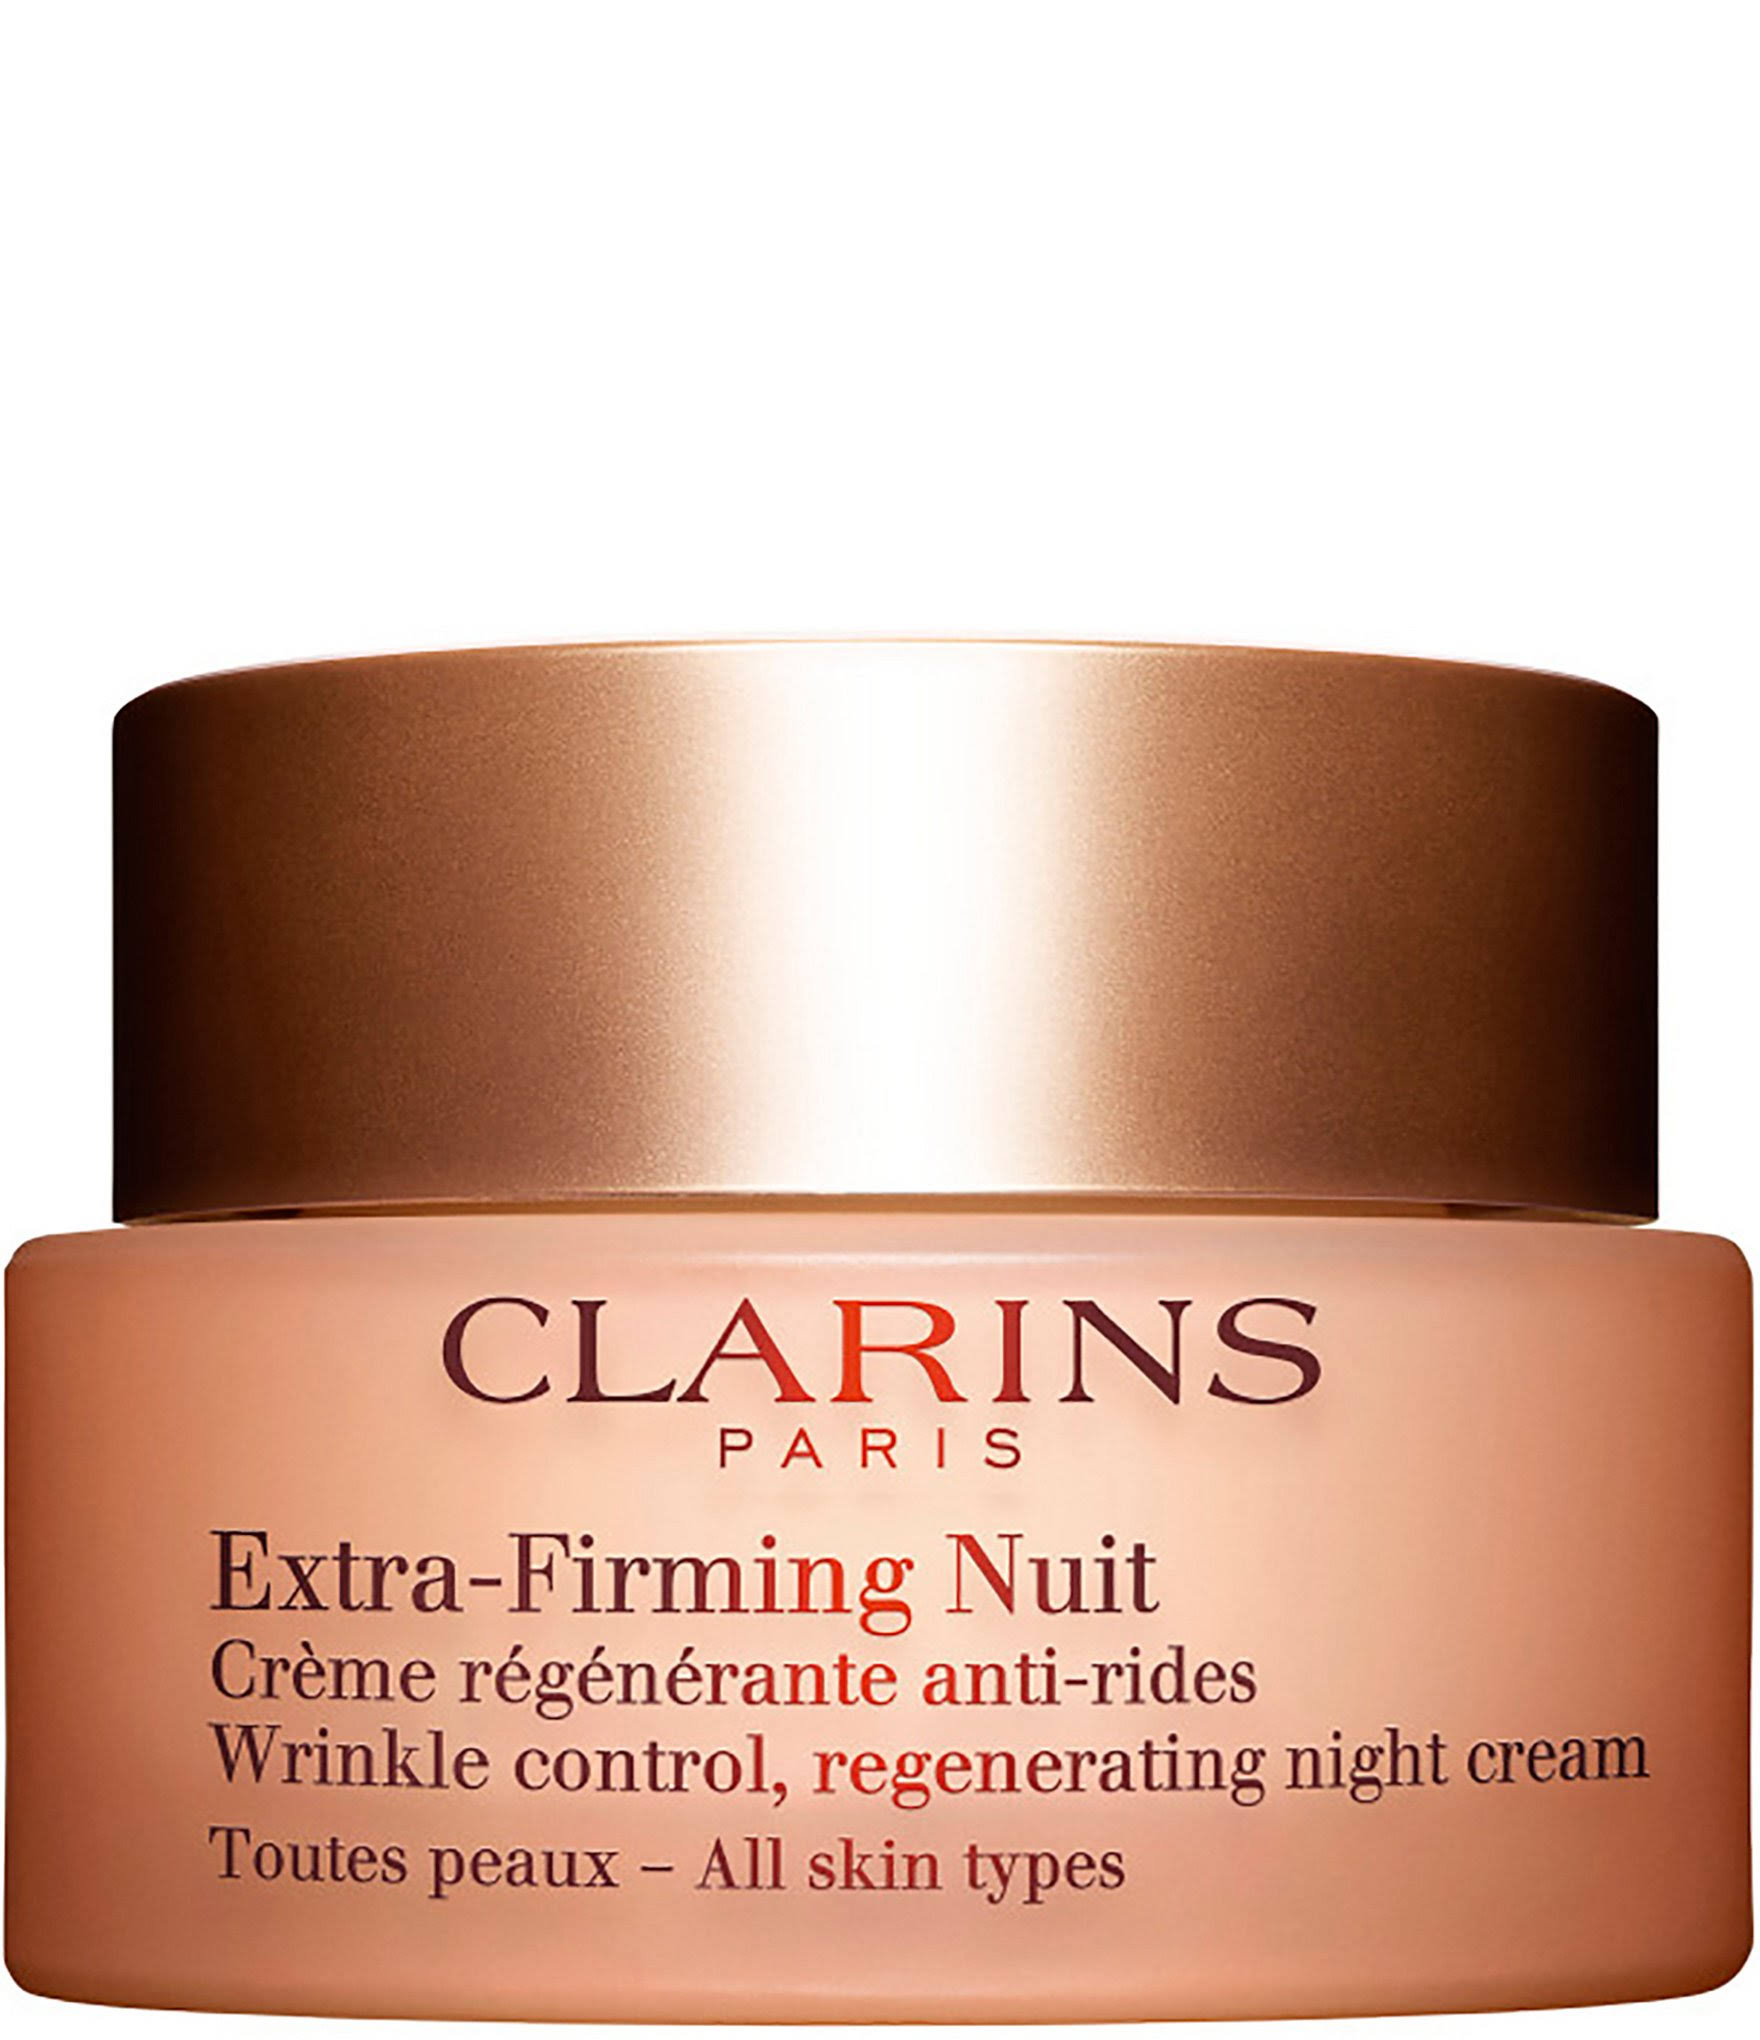 Clarins Extra-Firming Night Cream - All Skin Types, 1.6 oz.